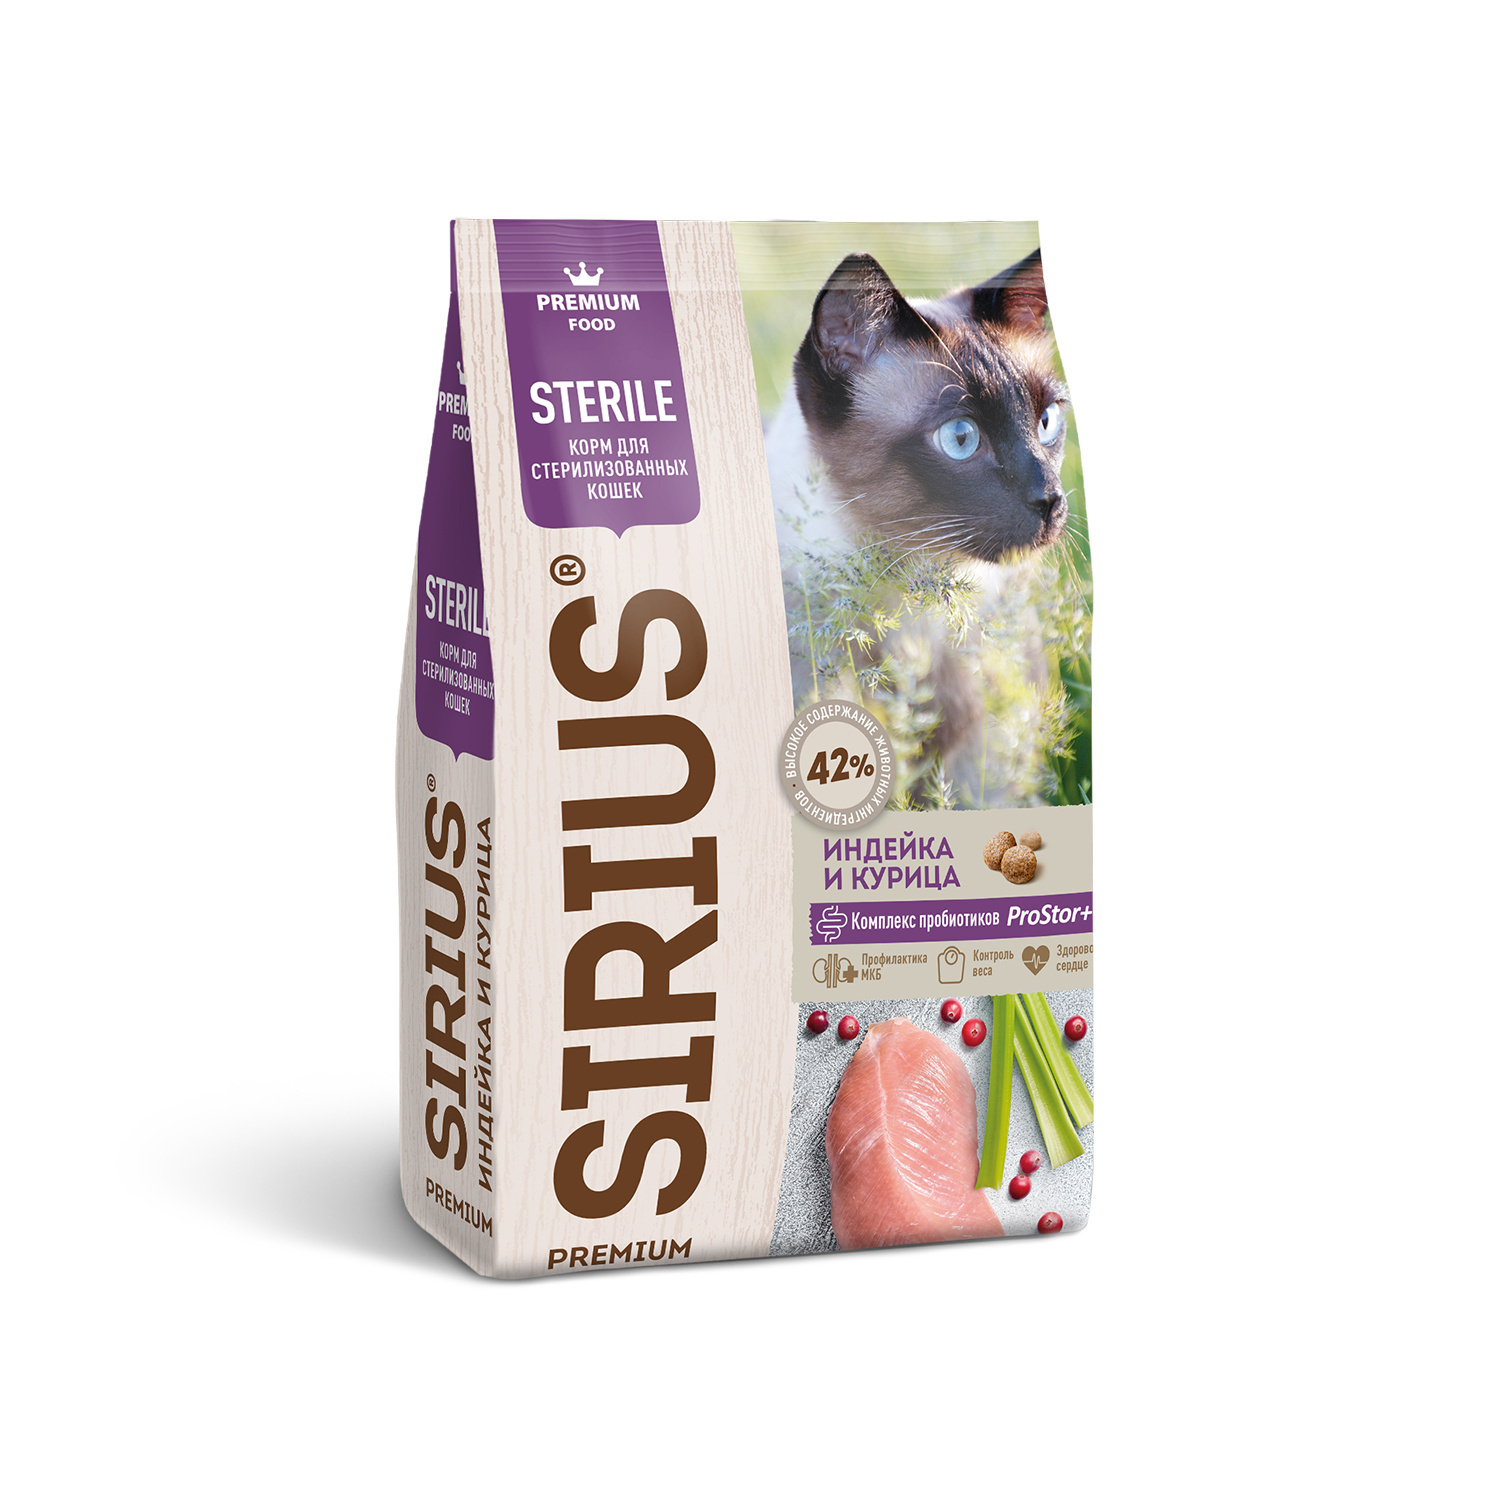 Sirius Sirius сухой корм для стерилизованных кошек, индейка и курица (1,5 кг) корм для кошек sirius индейка и курица для стерилизованных 1 5 кг